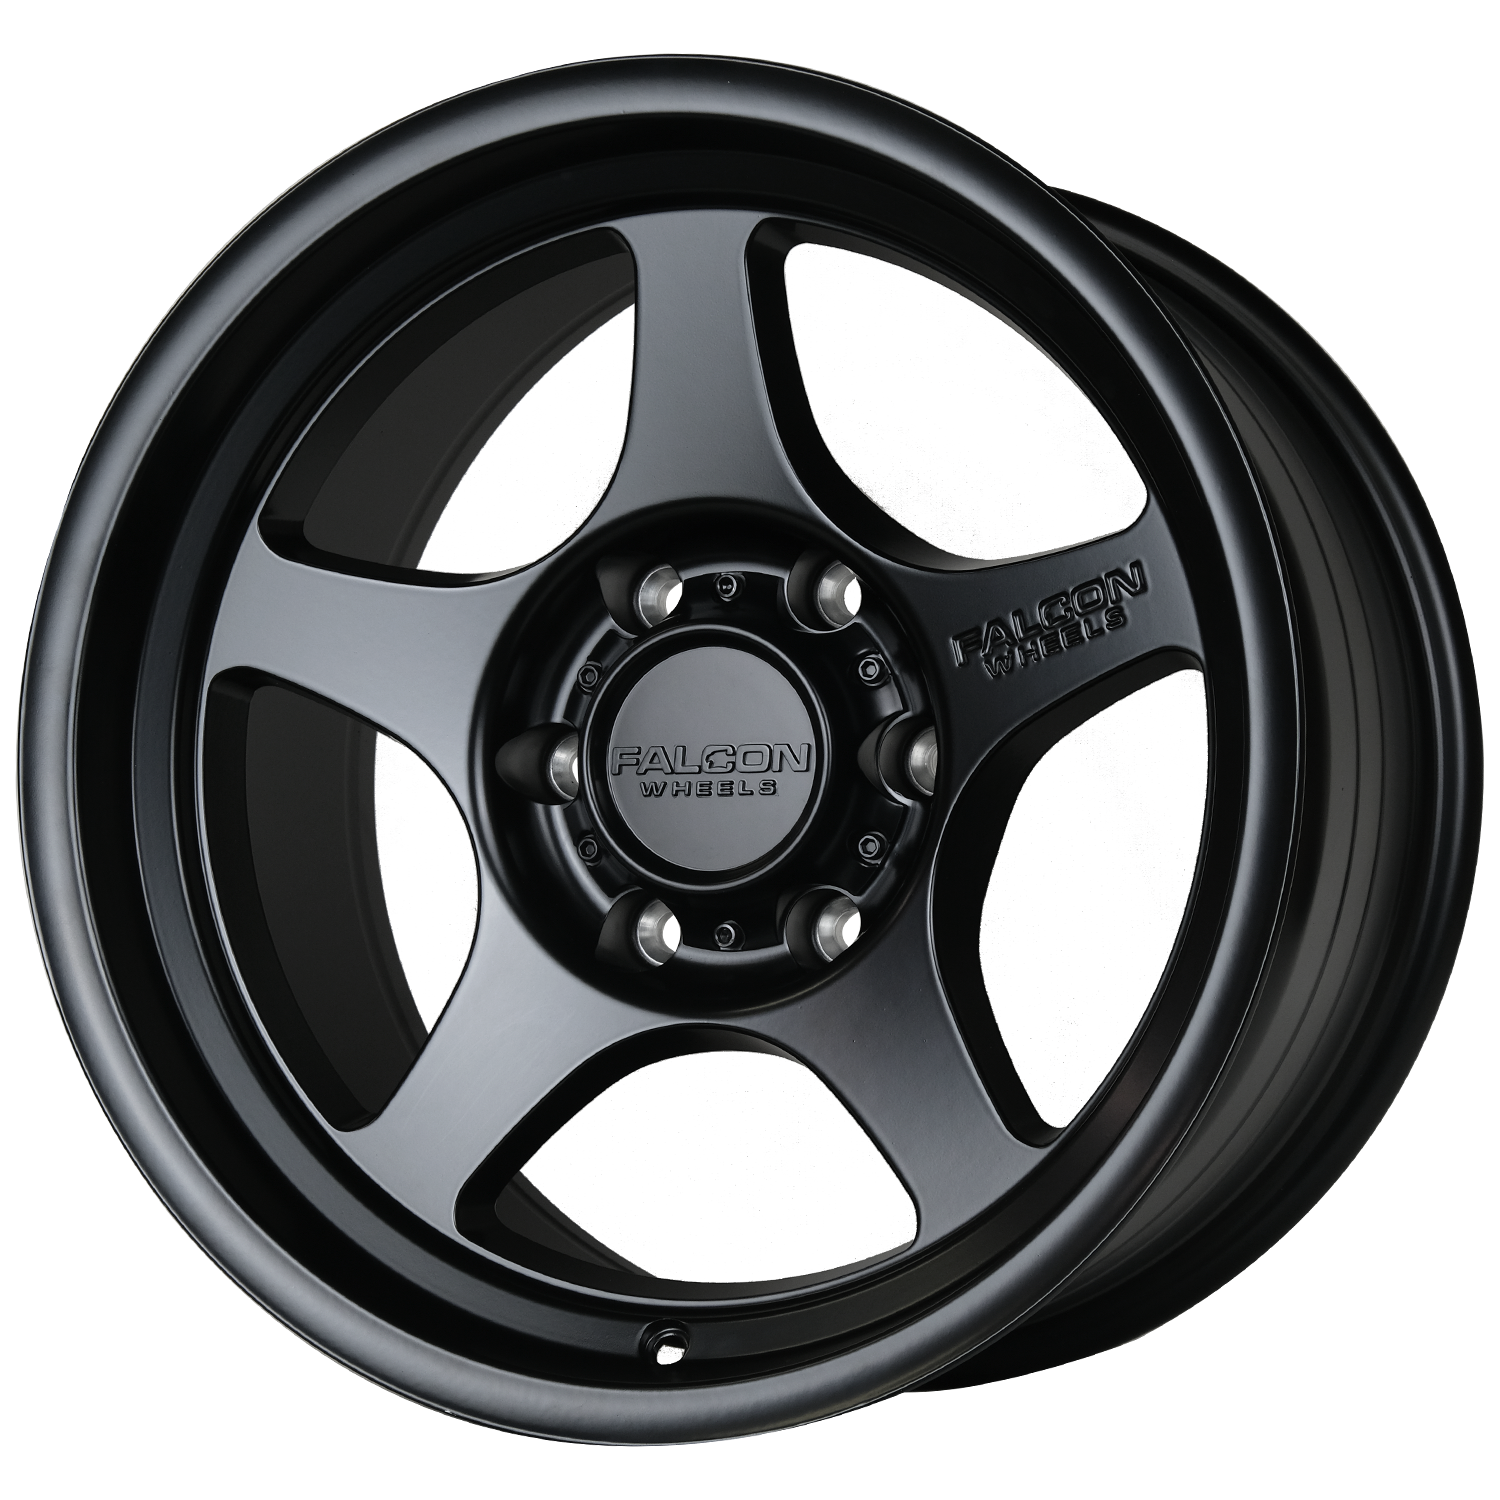 T2 - Matte Black 17x9 - Premium Wheels from Falcon Off-Road Wheels - Just $270! Shop now at Falcon Off-Road Wheels 